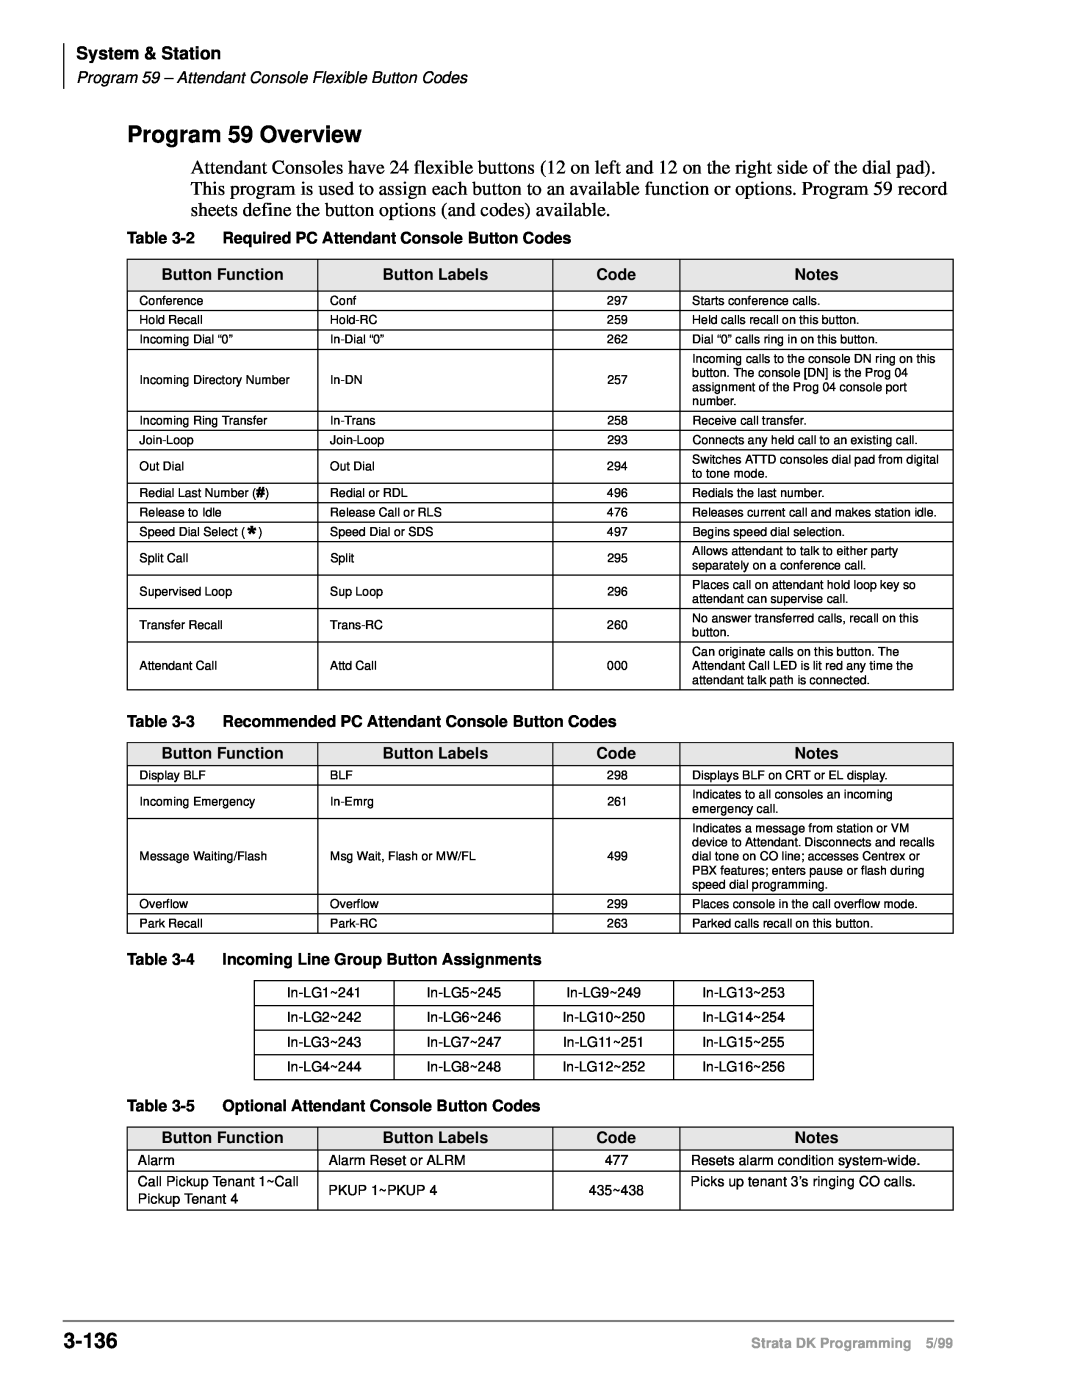 Toshiba dk14 manual Program 59 Overview, 3-136, System & Station 